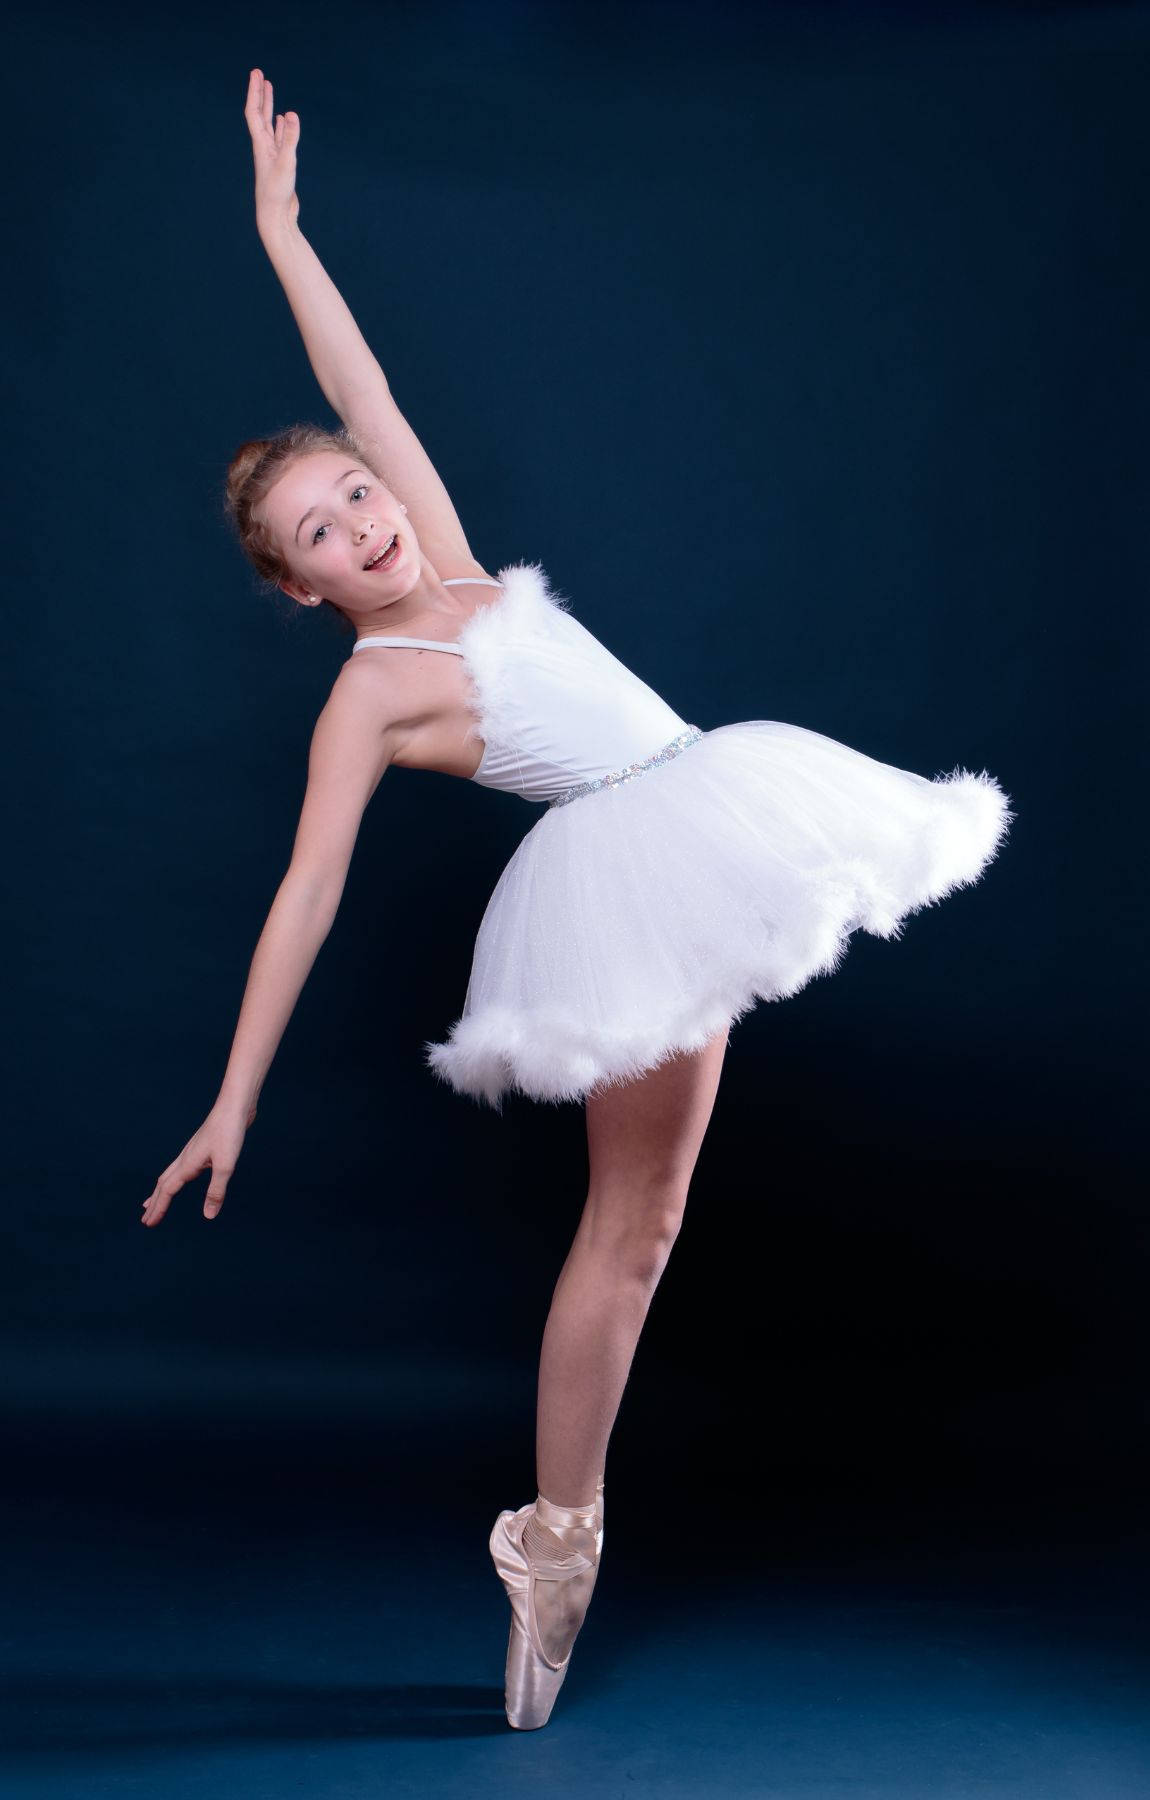 Lille pige leotard ballet danser Wallpaper